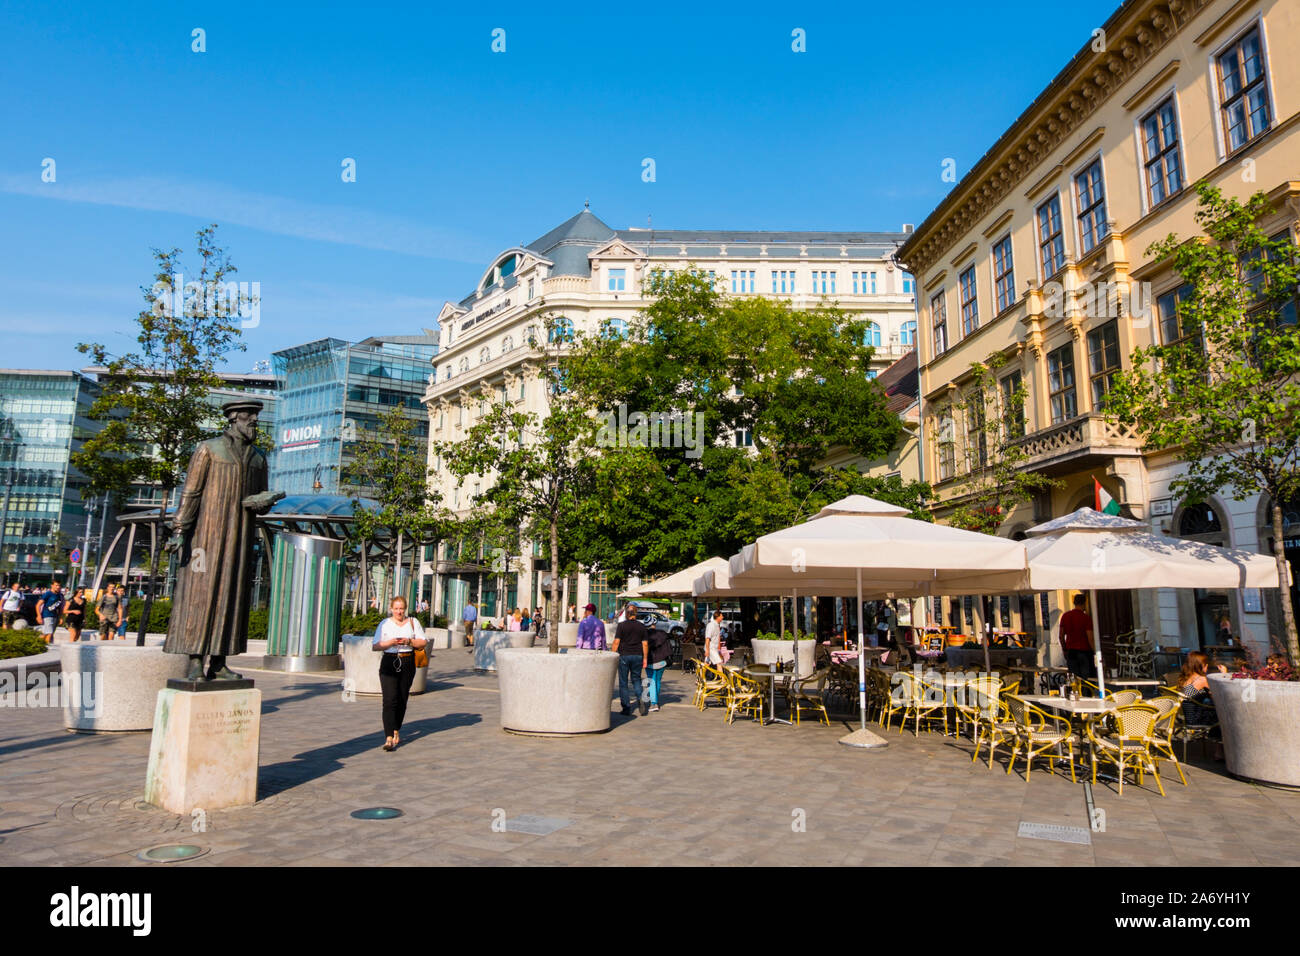 Kalvin ter, Budapest, Hungary Stock Photo - Alamy